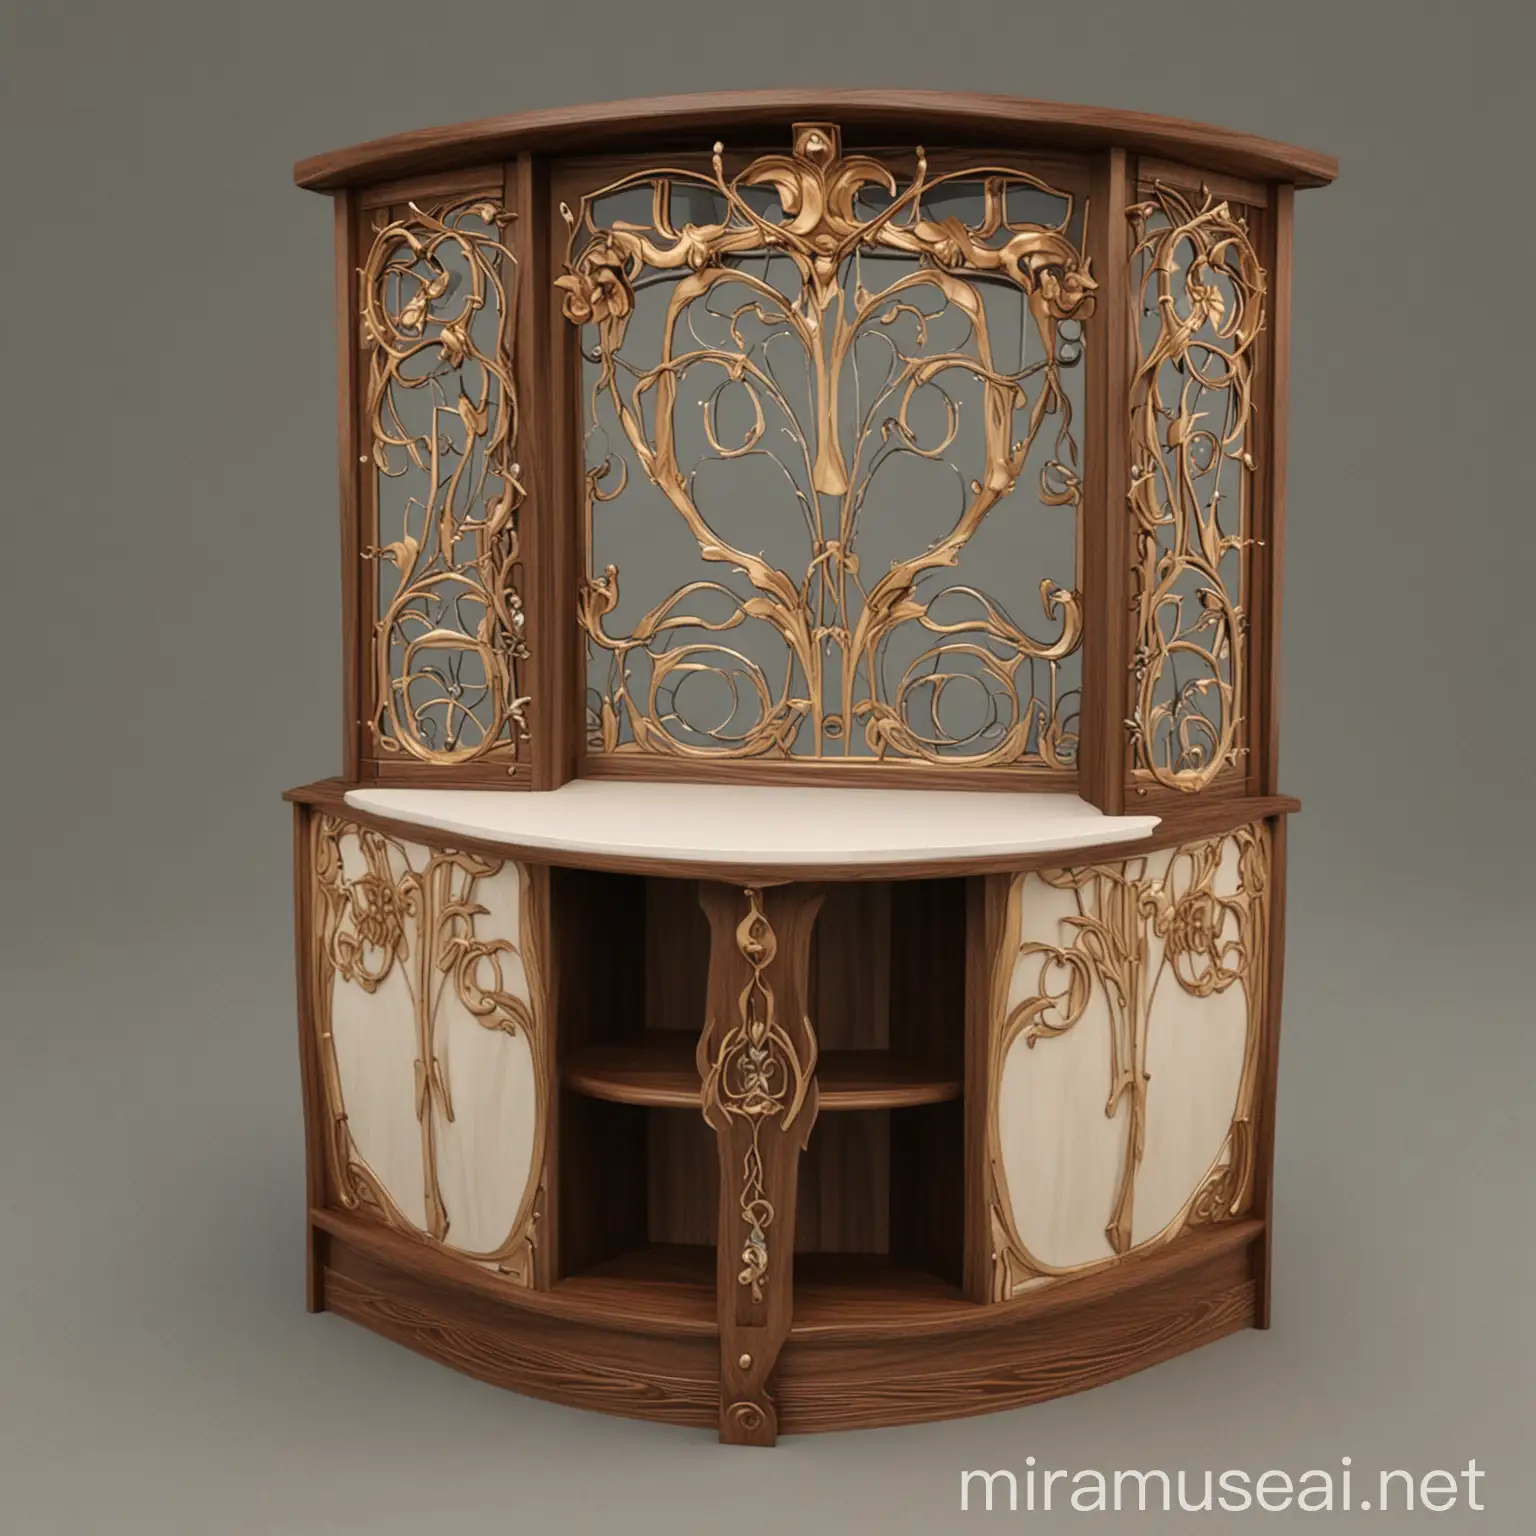 Art Nouveau Inspired Coffee Corner Unit Design